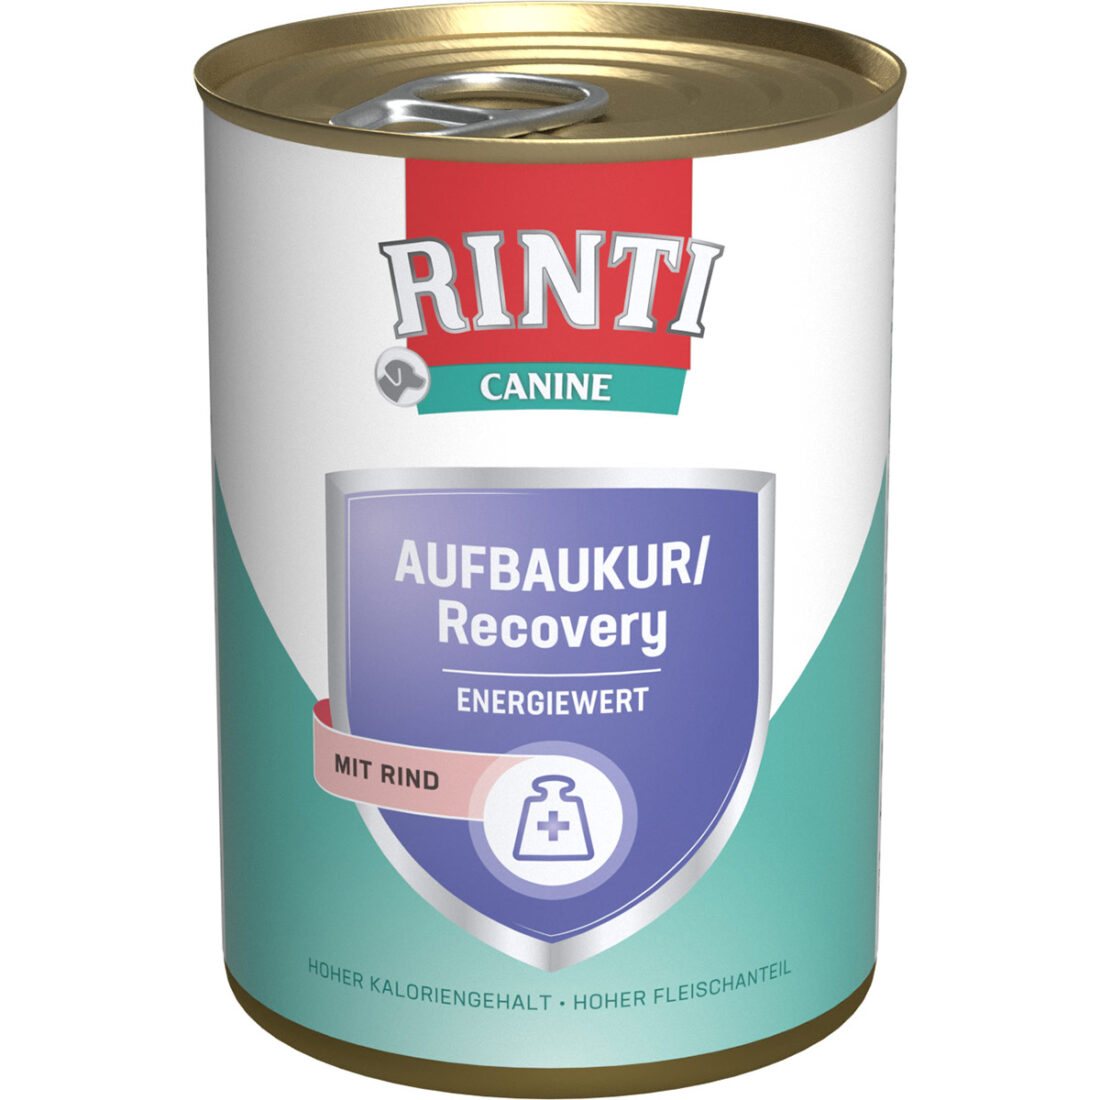 RINTI Canine Aufbaukur/Recovery hovězí maso 6